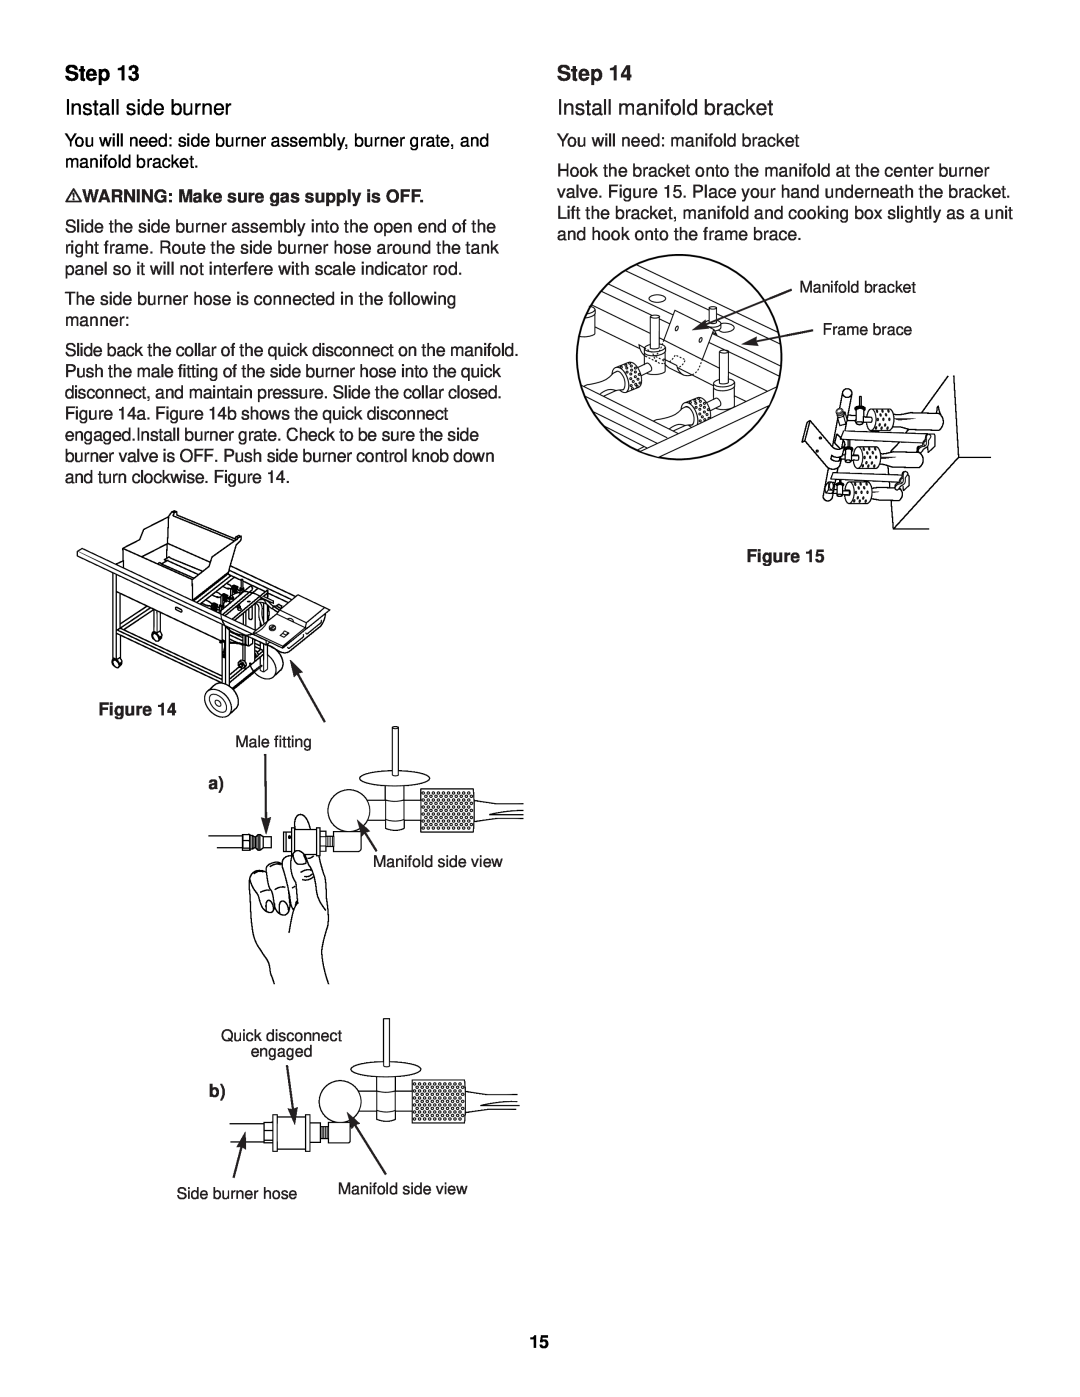 Weber 3000 LX Step, Install side burner, Install manifold bracket, mWARNING Make sure gas supply is OFF, Figure Figure 